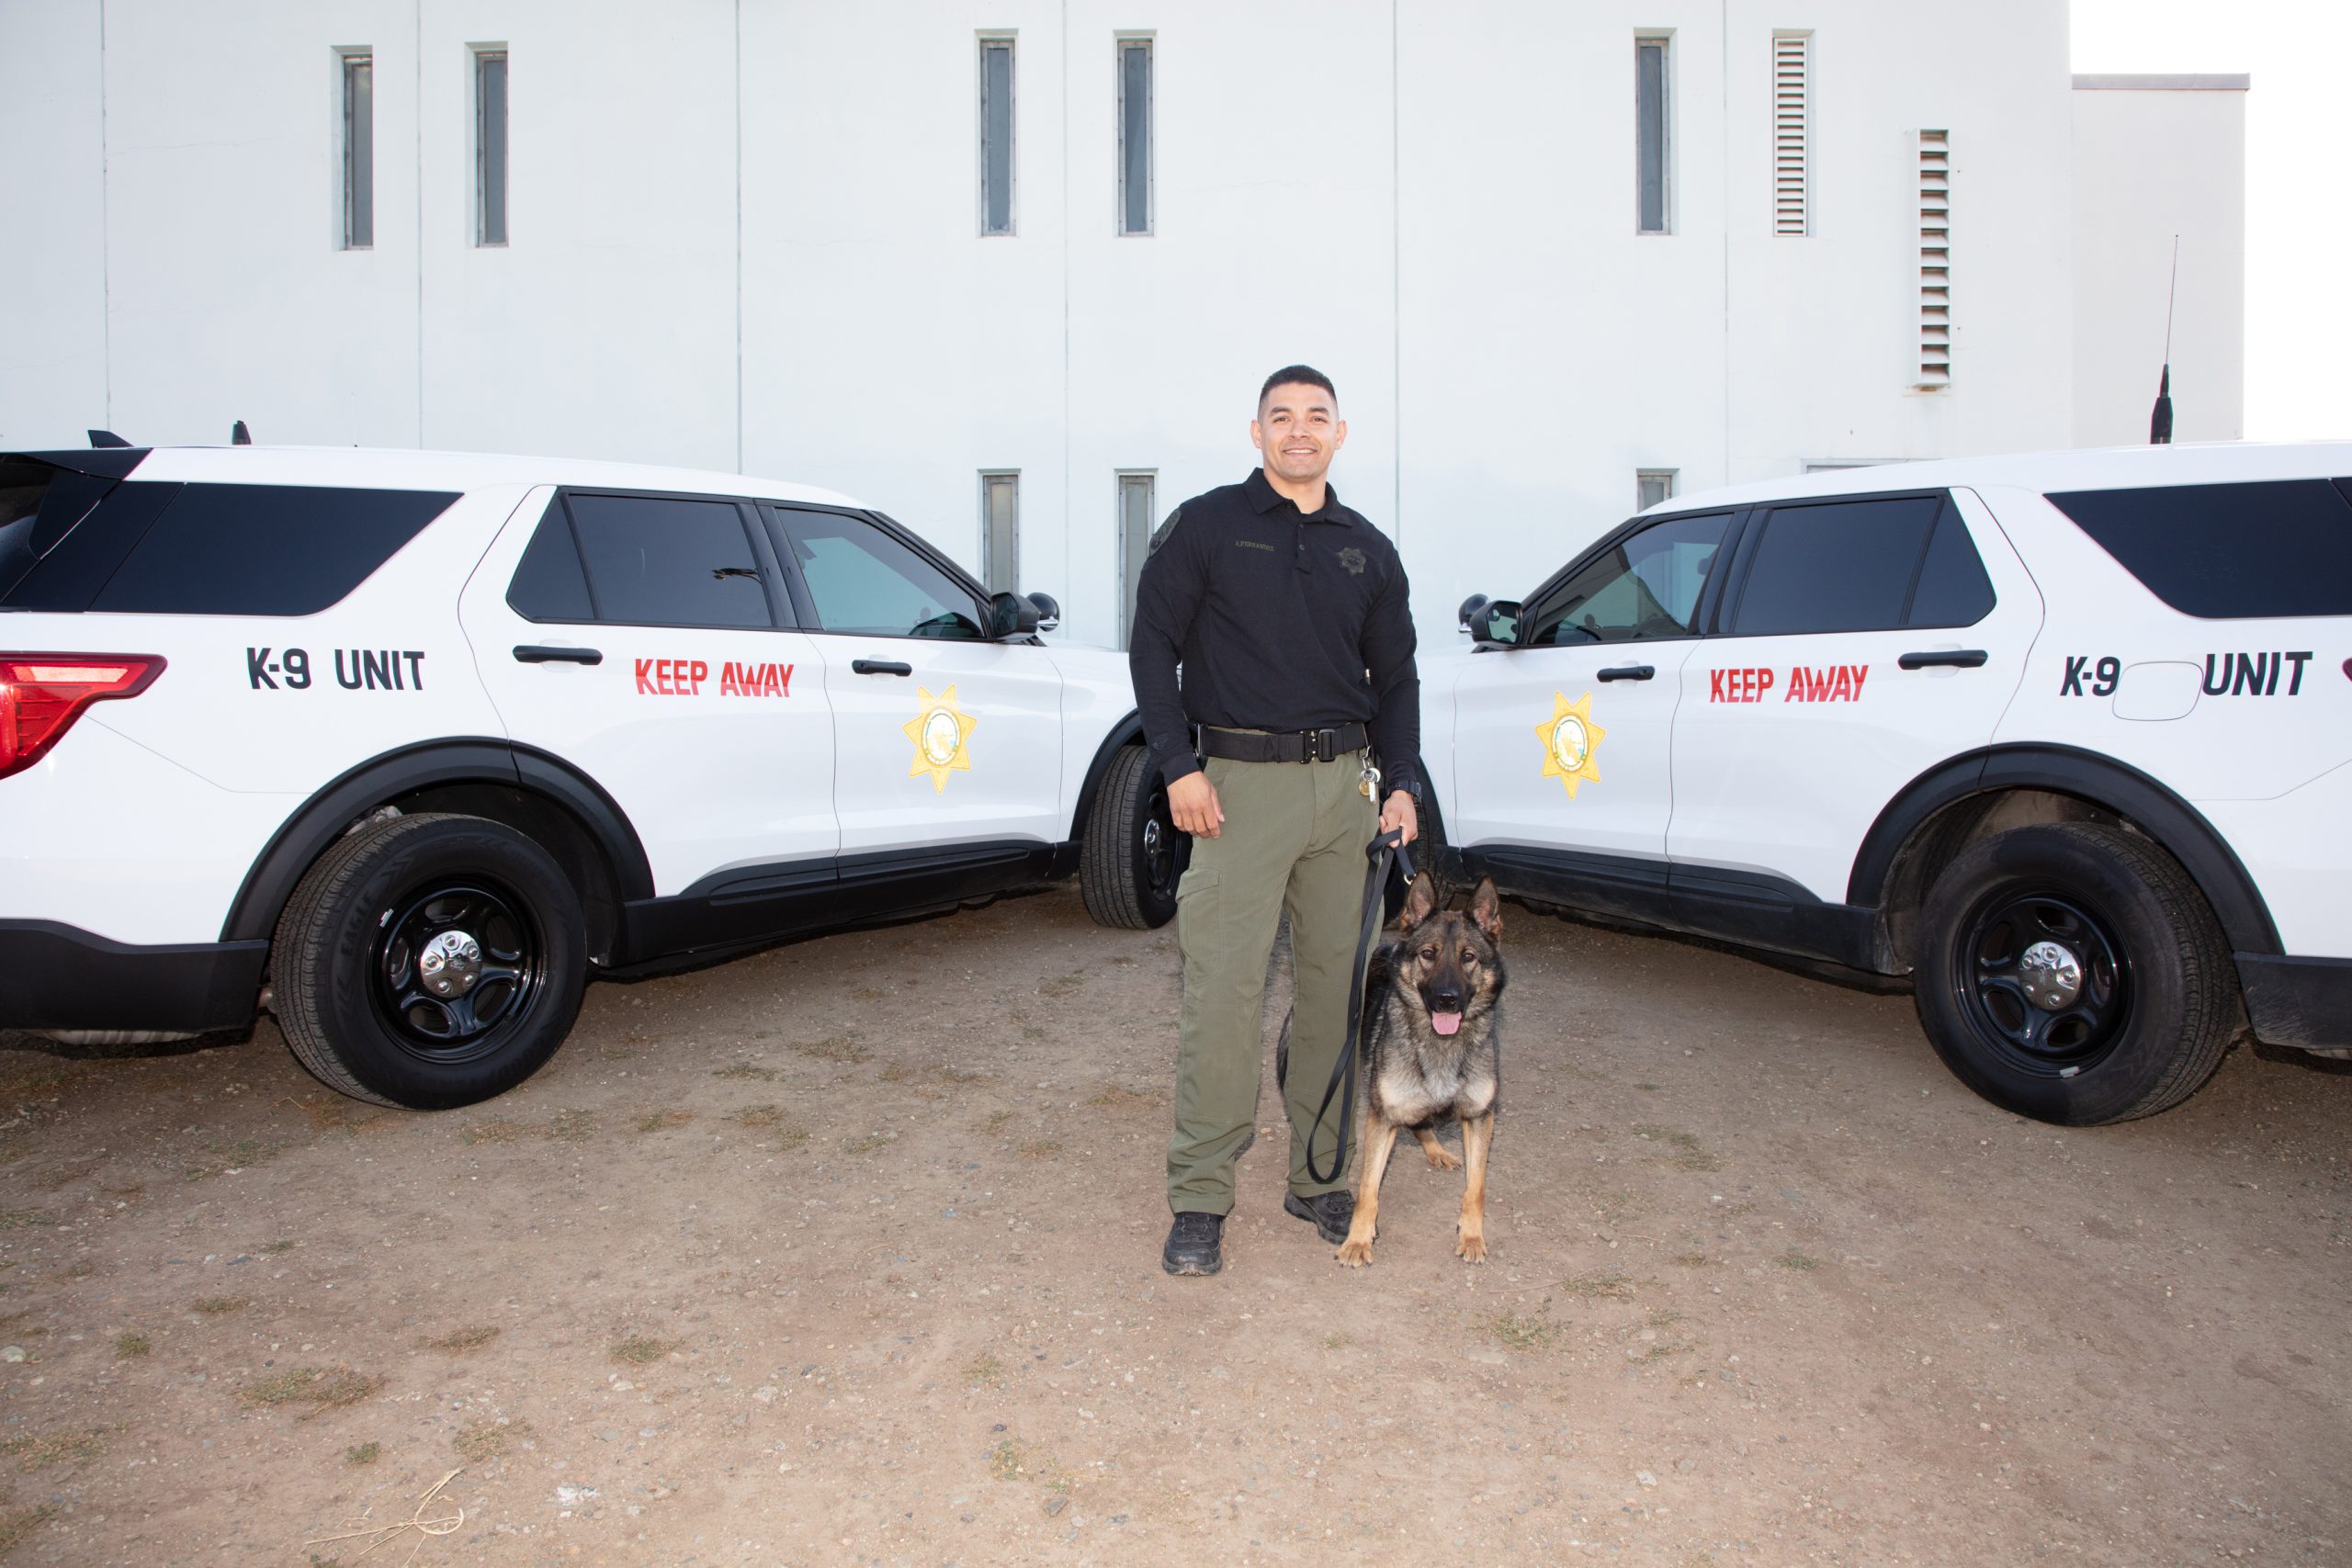 Correctional officer Fernandez and a dog.